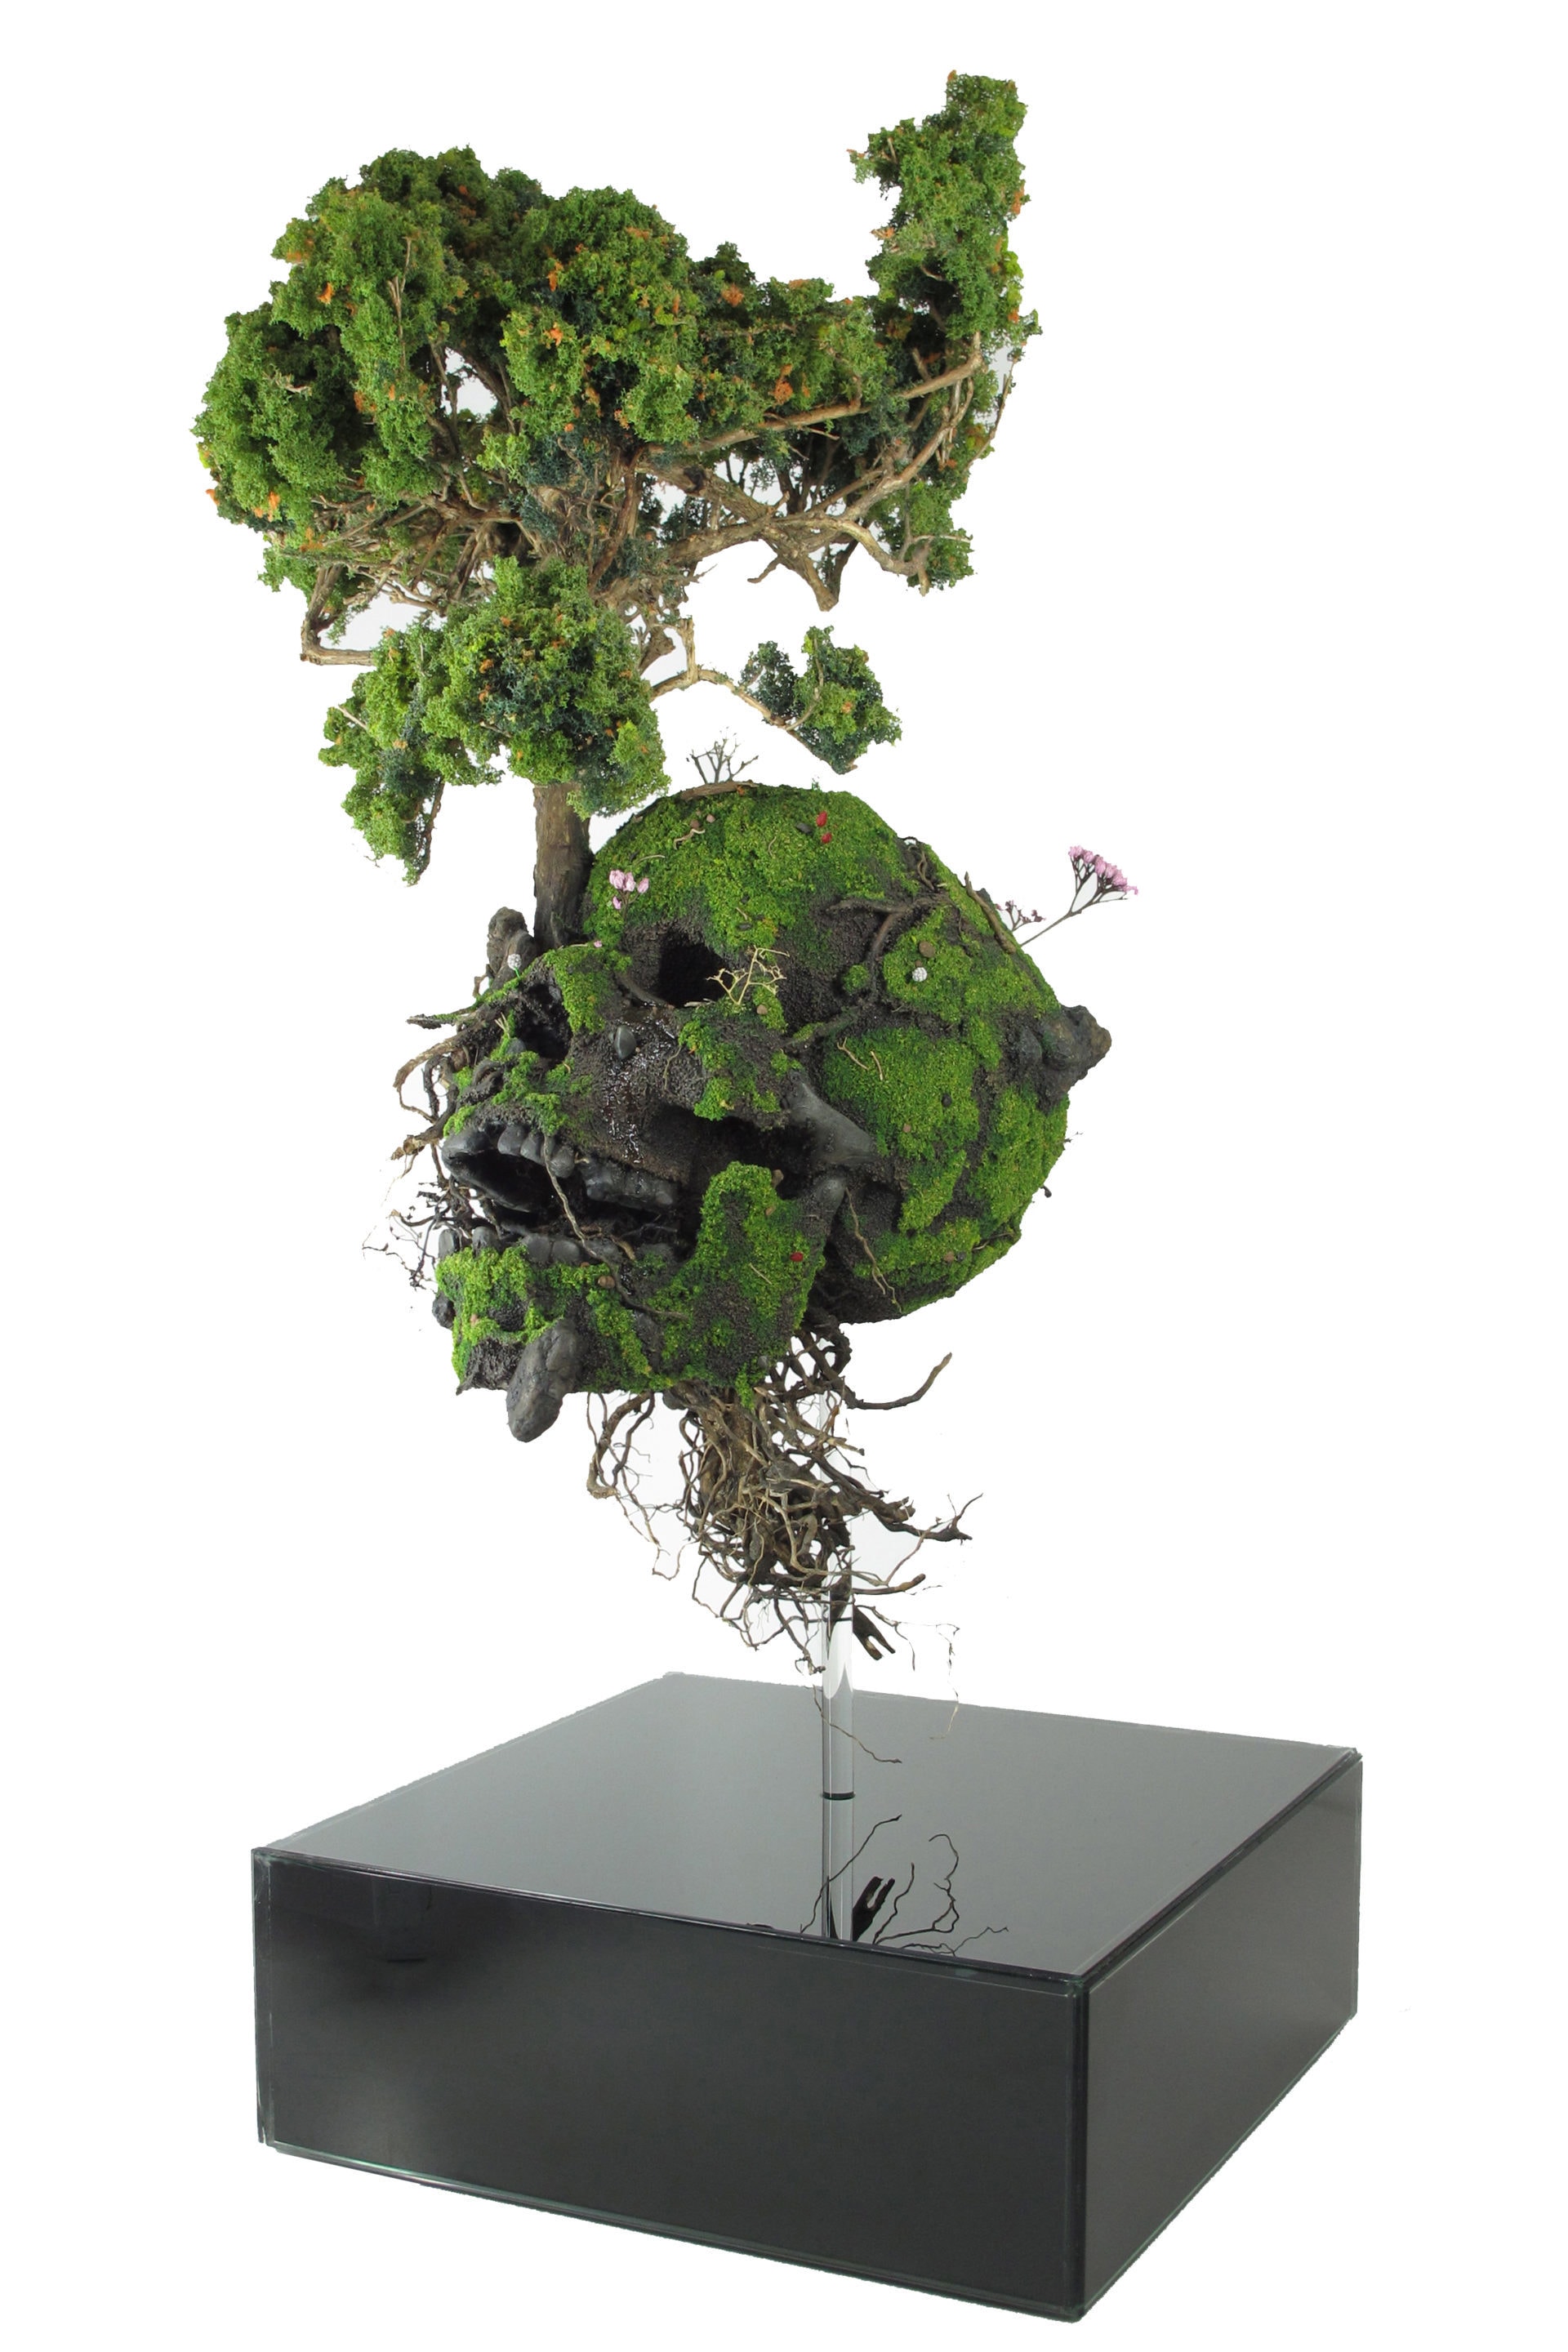 Emeric Chantier, Green Skull, technique mixte, H. 45 x L. 25 x P. 25 cm, 2010-2011, ©A2Z Art Gallery et Emeric Chantier